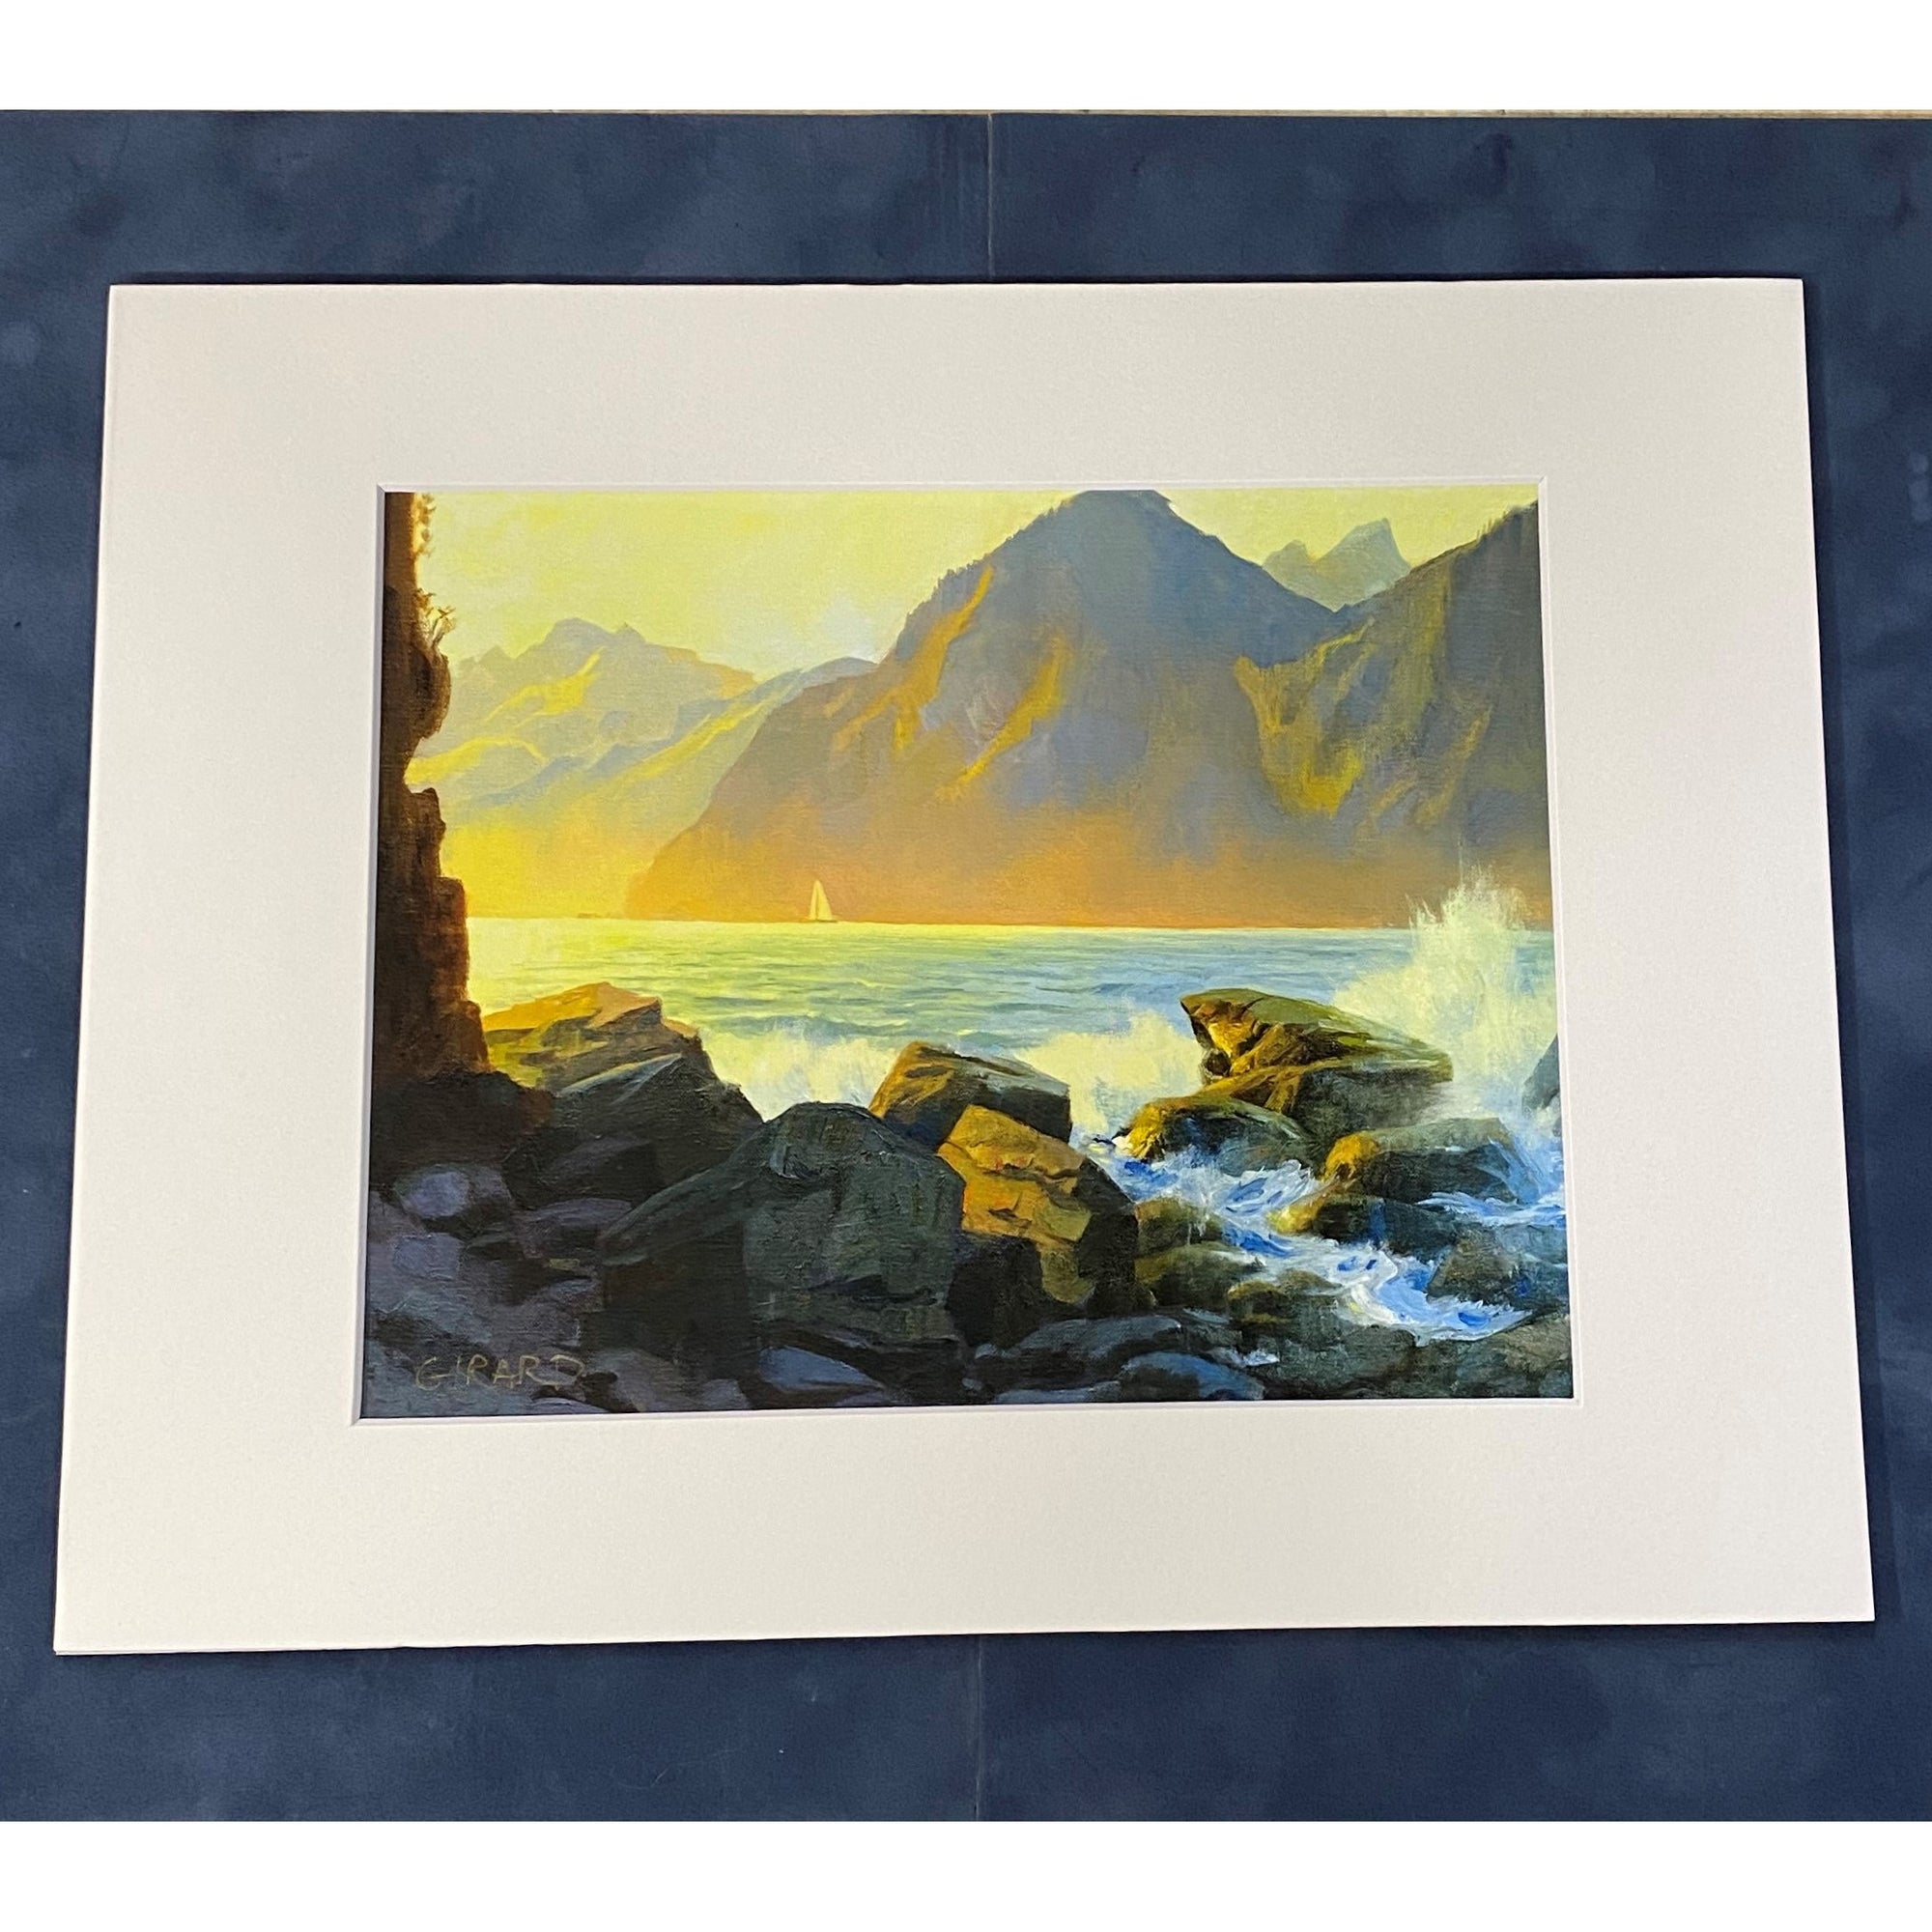 Fox Island Resurrection Bay - Giclee Print by artist Francois Girard